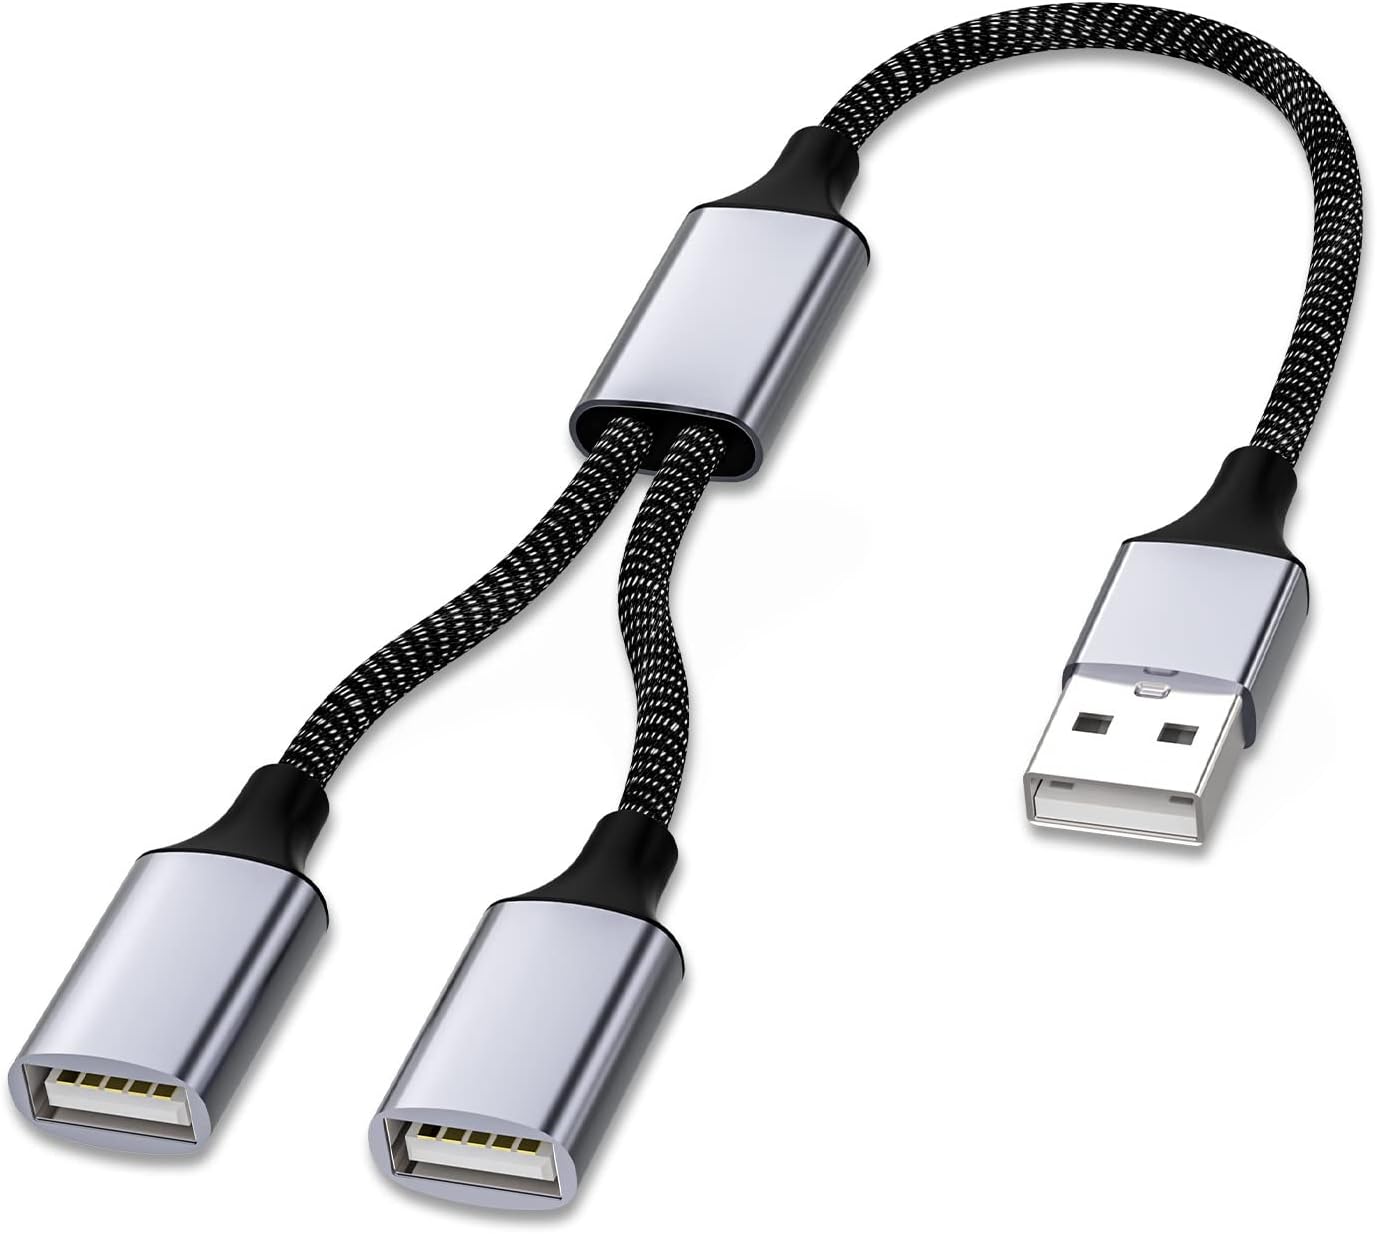 Jasput USB Splitter Cable,1 Male to 2 Female USB [...]